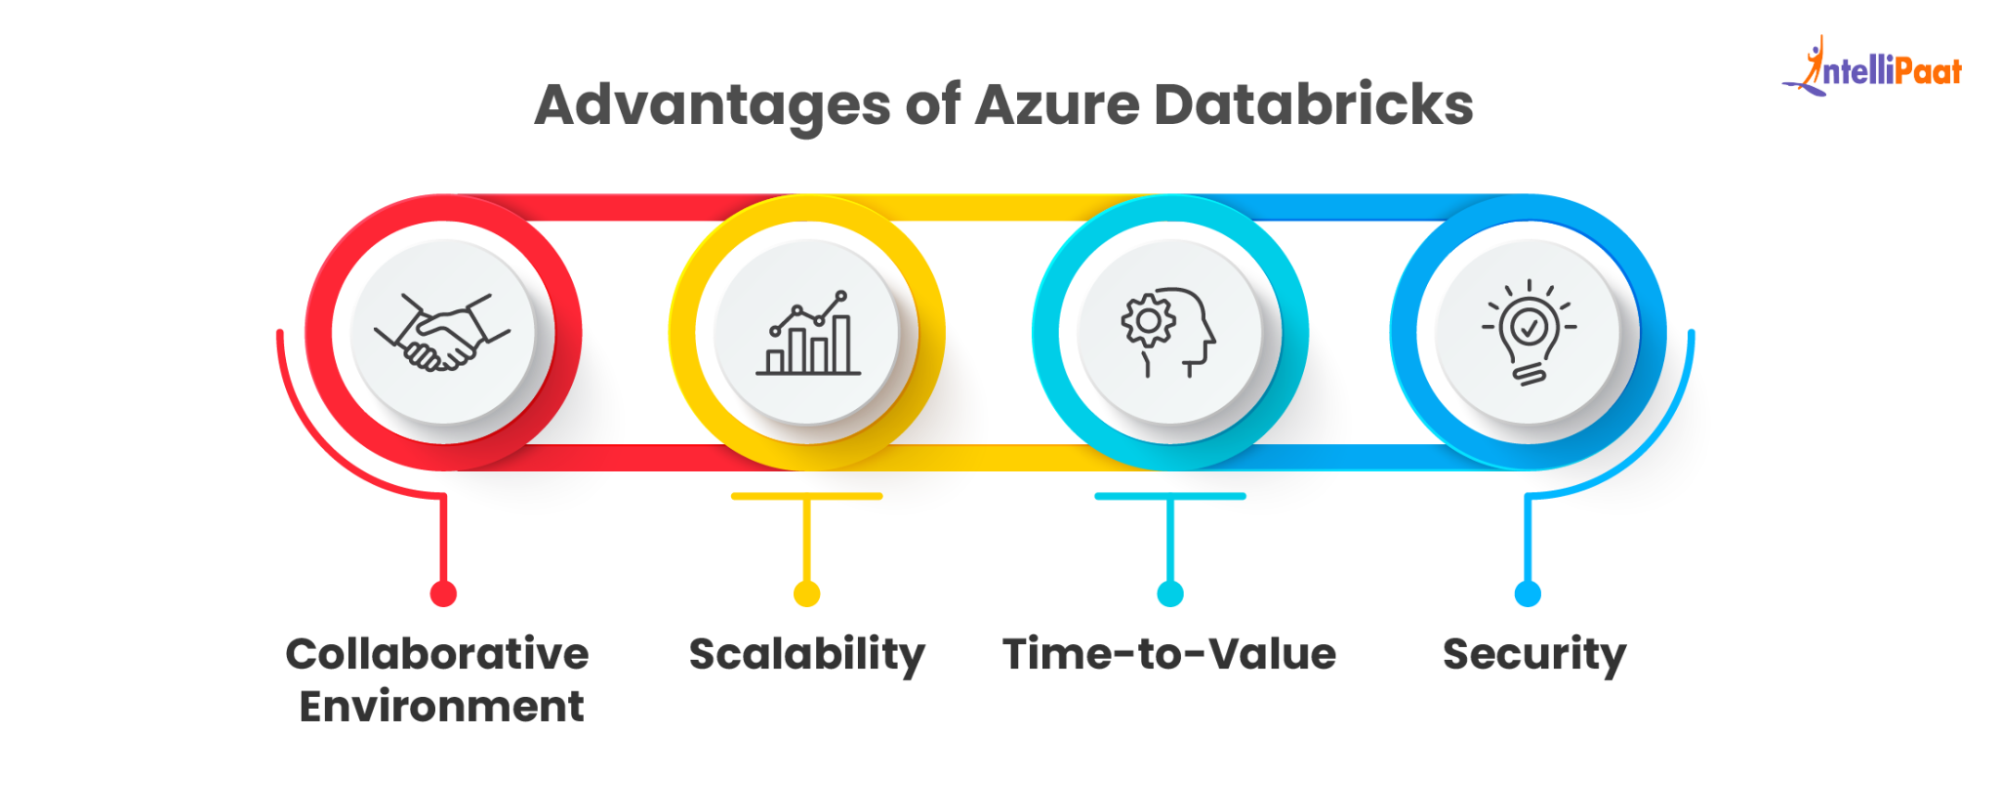  Advantages of Azure Databricks